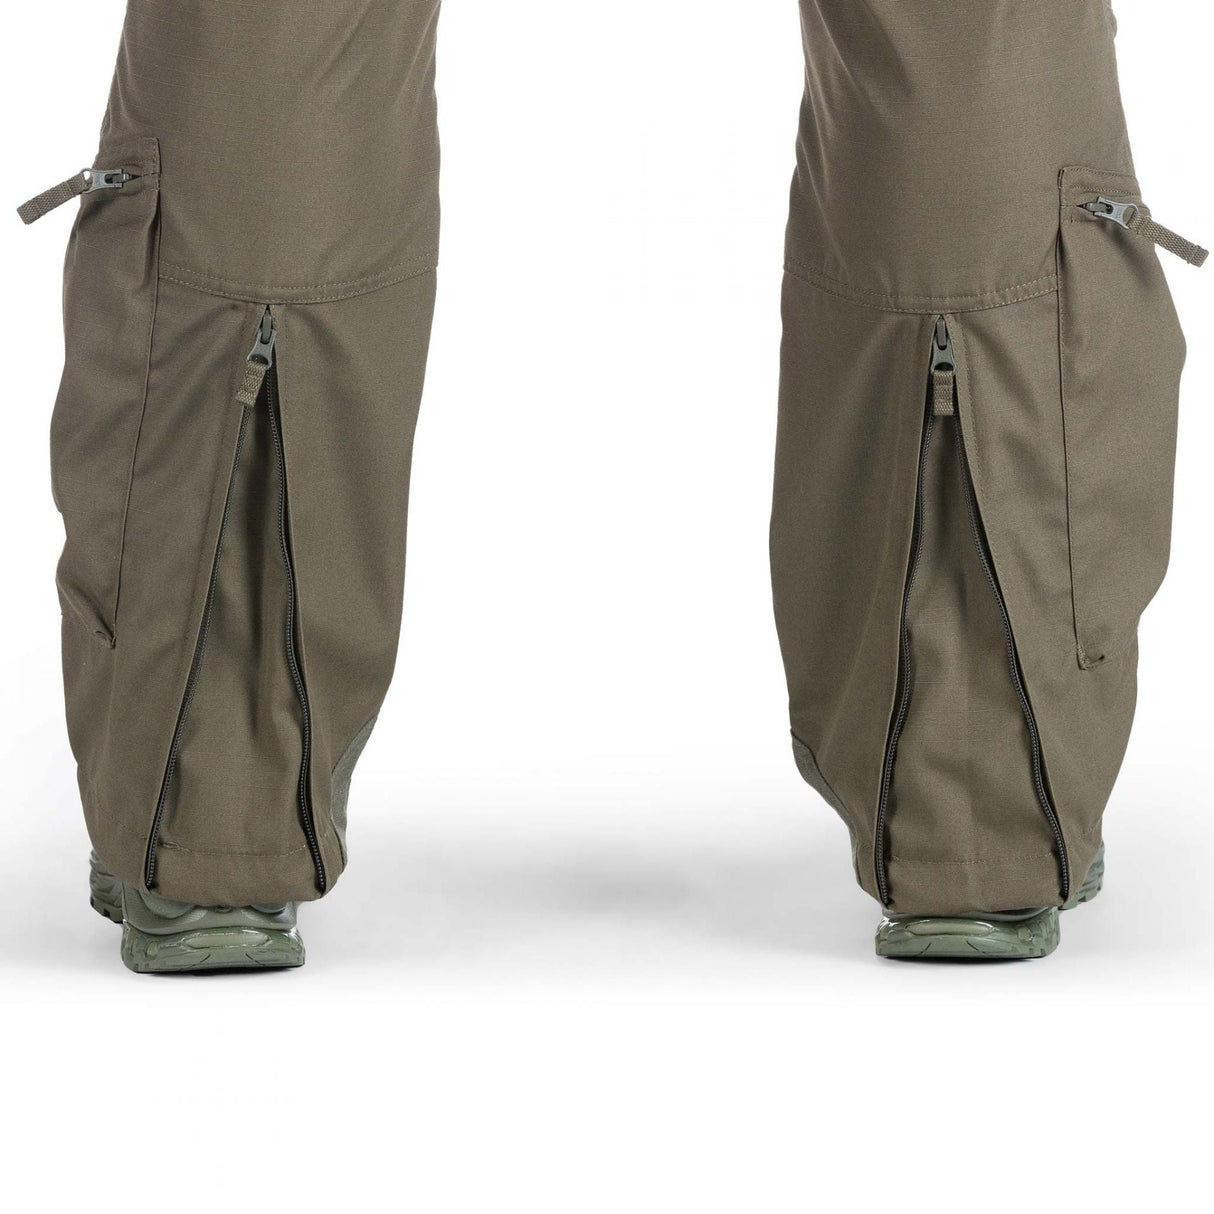 Combat Trousers: Schoeller®-dynamic stretch material, CORDURA® reinforcements, versatile pocket layout.